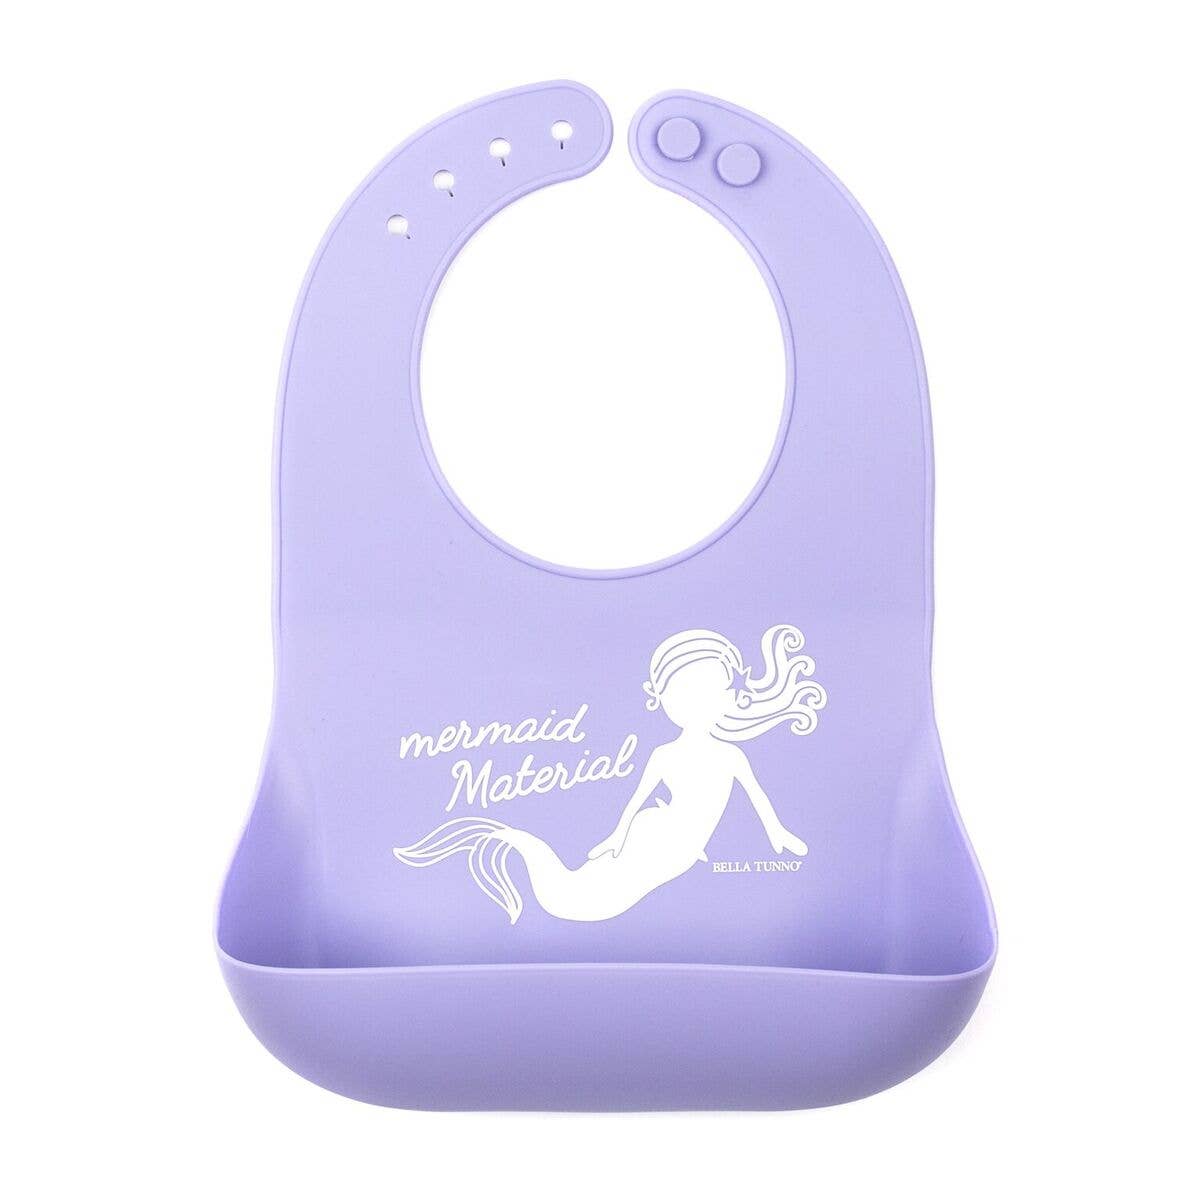 Wonder Bib - Mermaid Material - Crunch Natural Parenting is where to buy